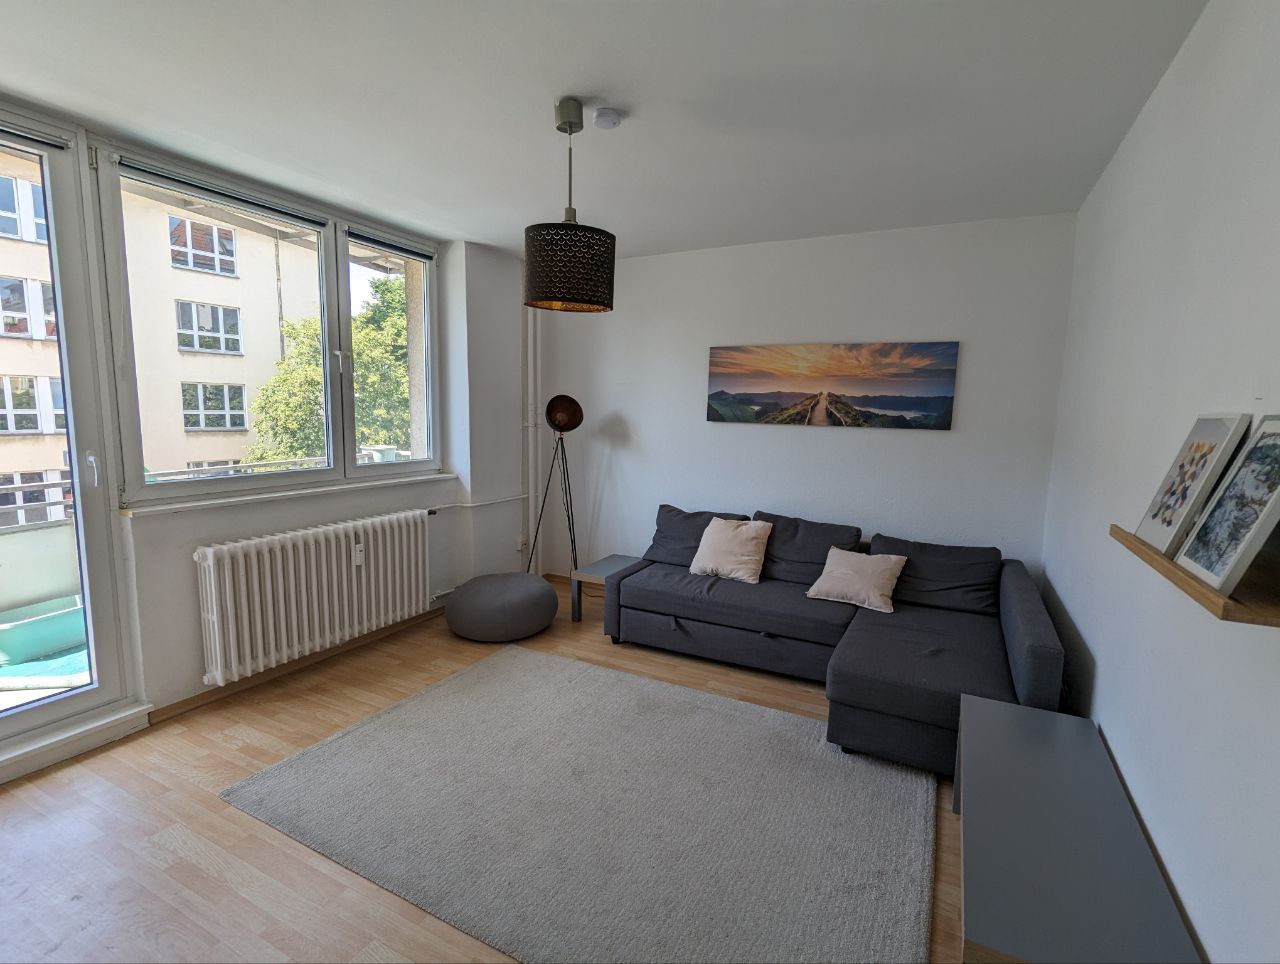 2 bedroom appartment very close to Gesundbrunnen station